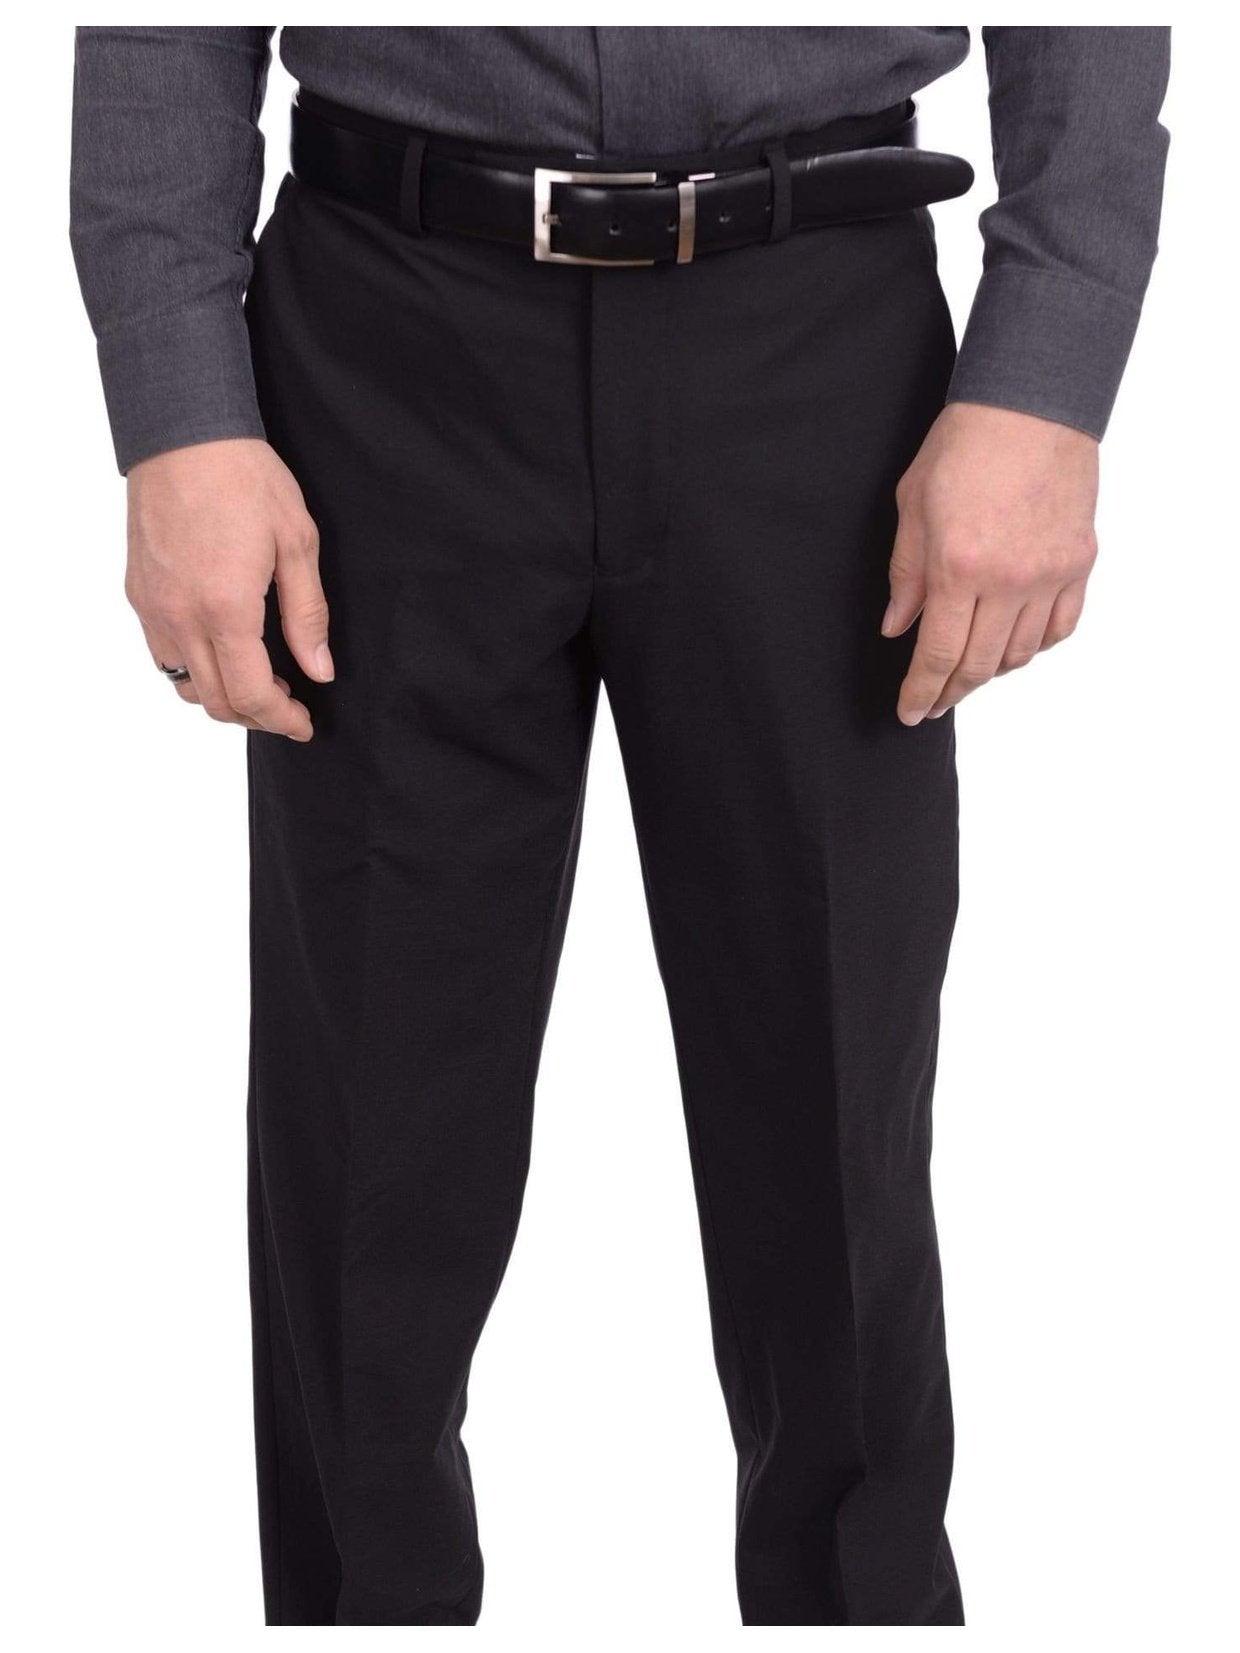 Buy SREY Formal Trouser Pant for Men (Coffee) at Amazon.in